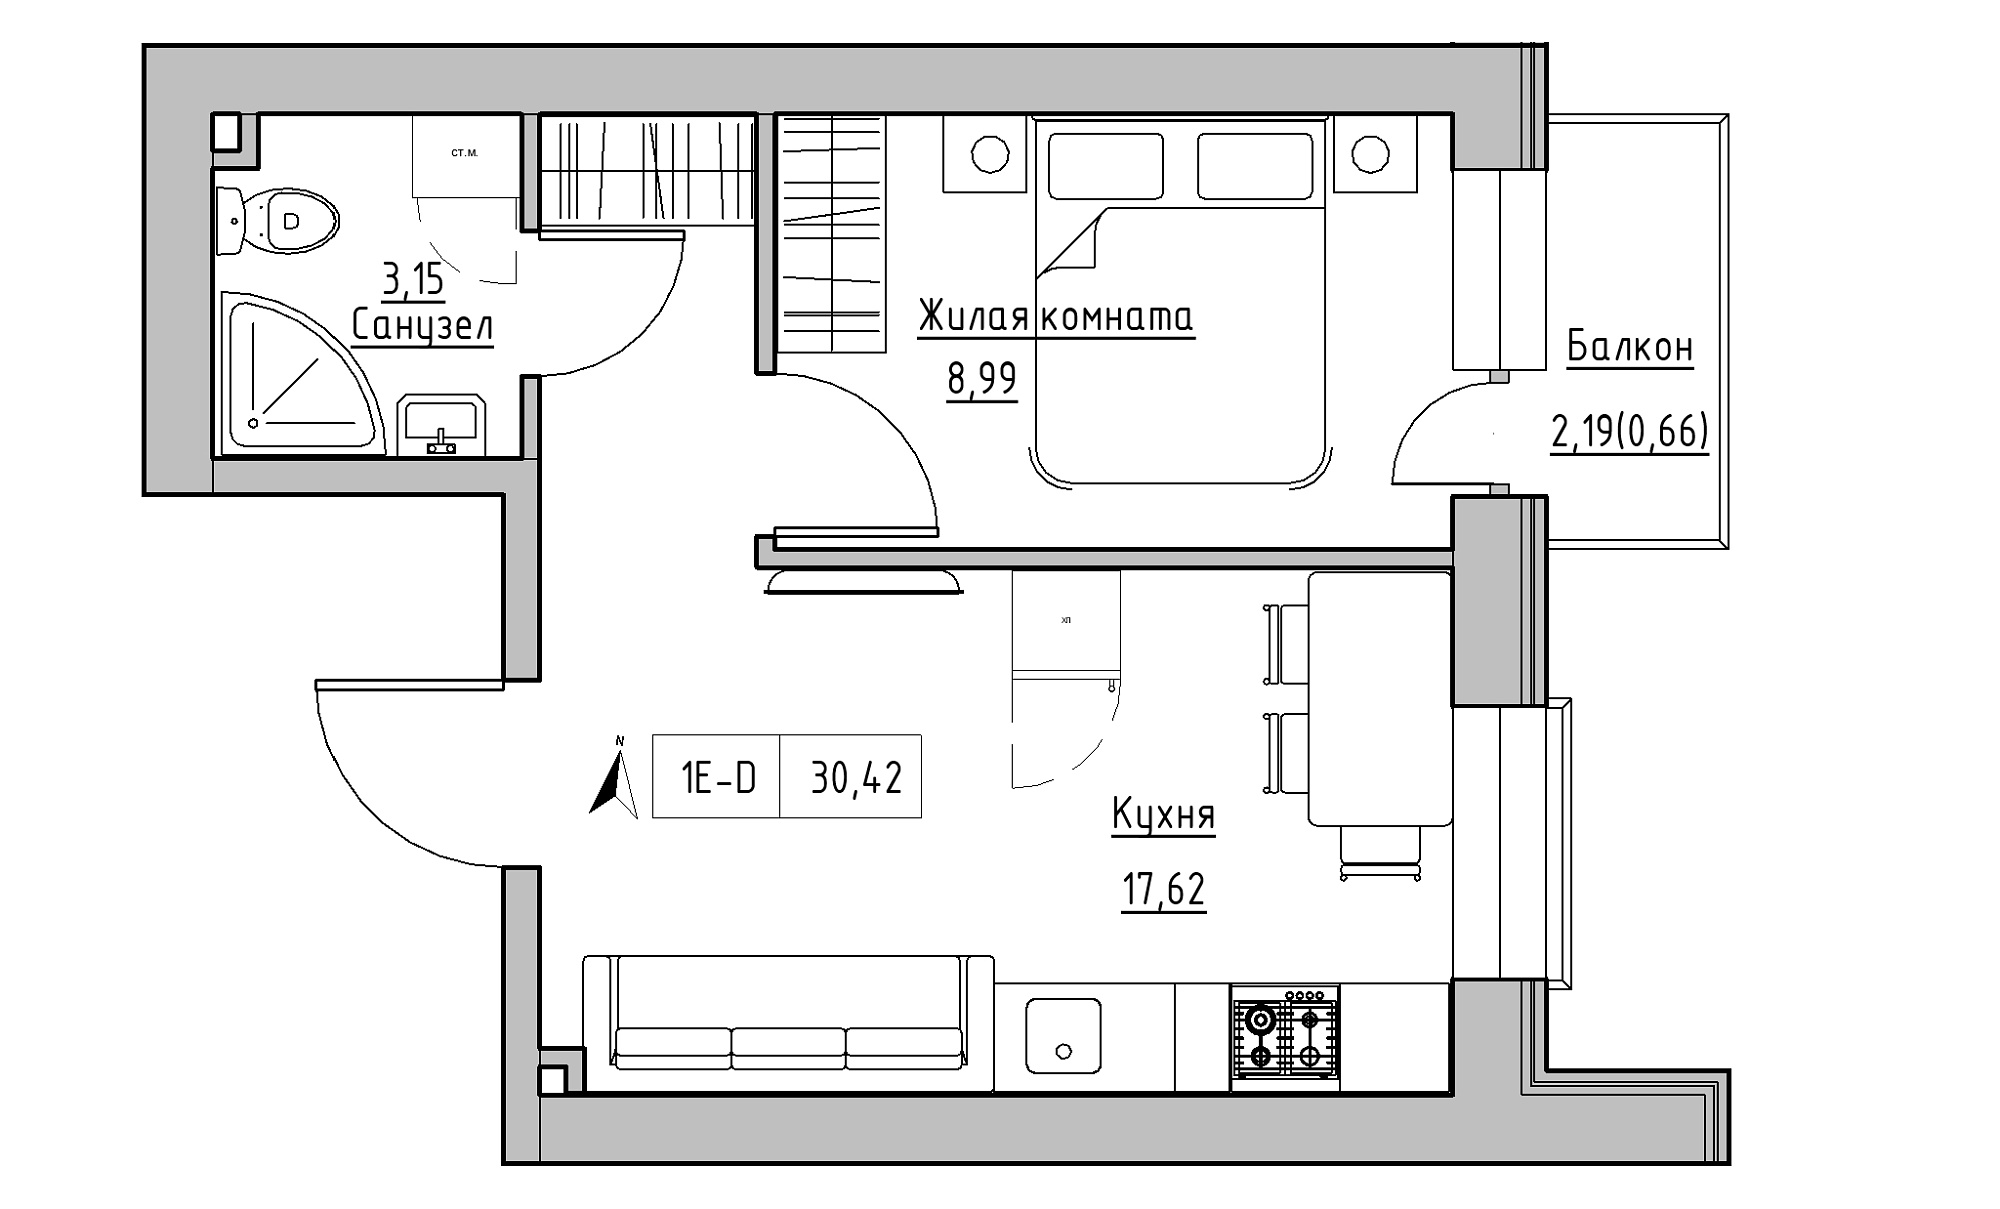 Planning 1-rm flats area 30.42m2, KS-016-05/0016.